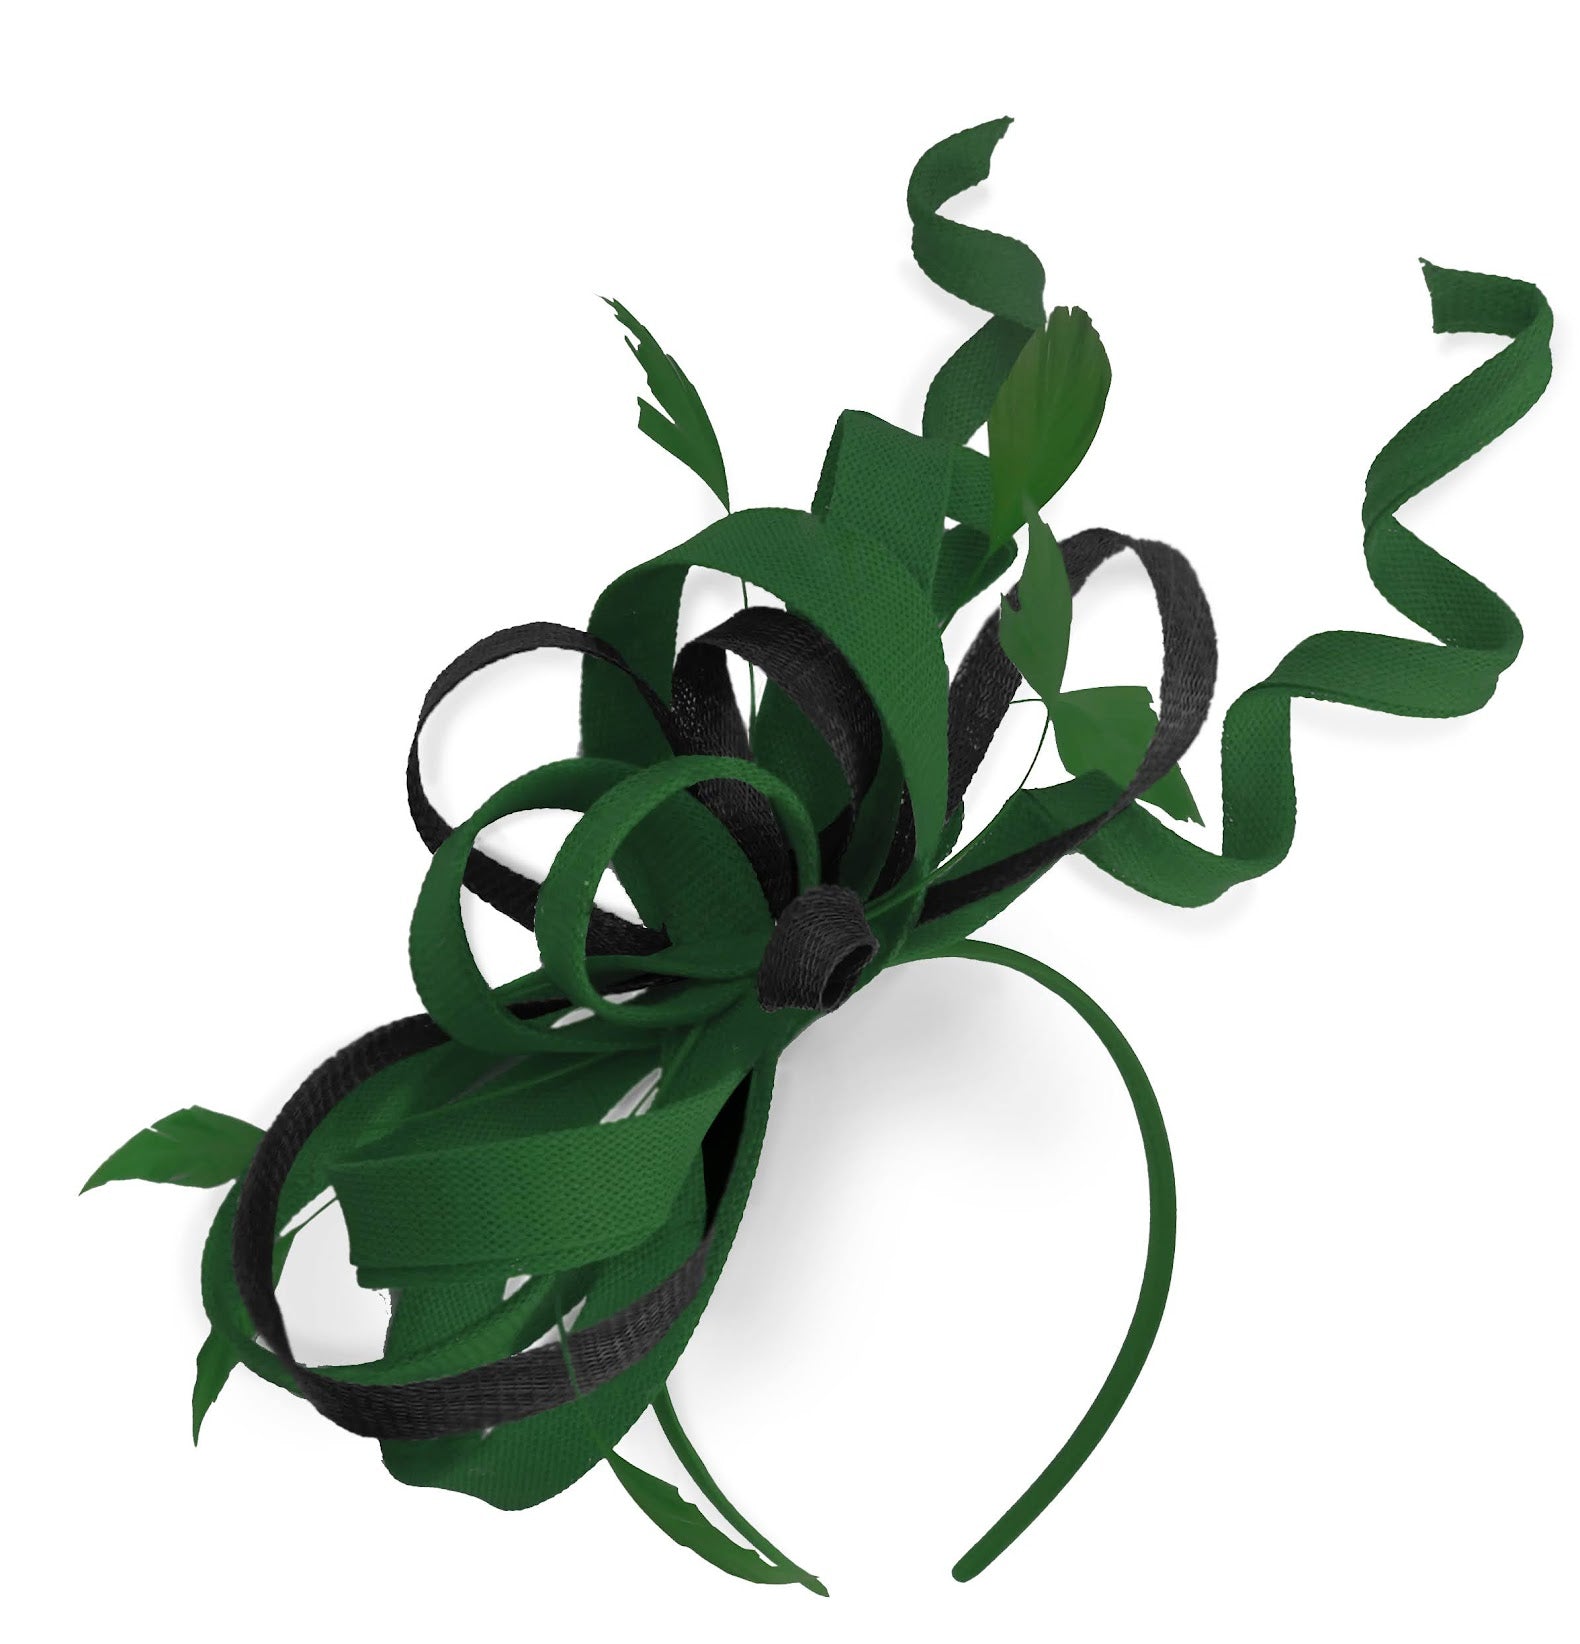 Caprilite Green and Black Wedding Swirl Fascinator Headband Alice Band Ascot Races Loop Net